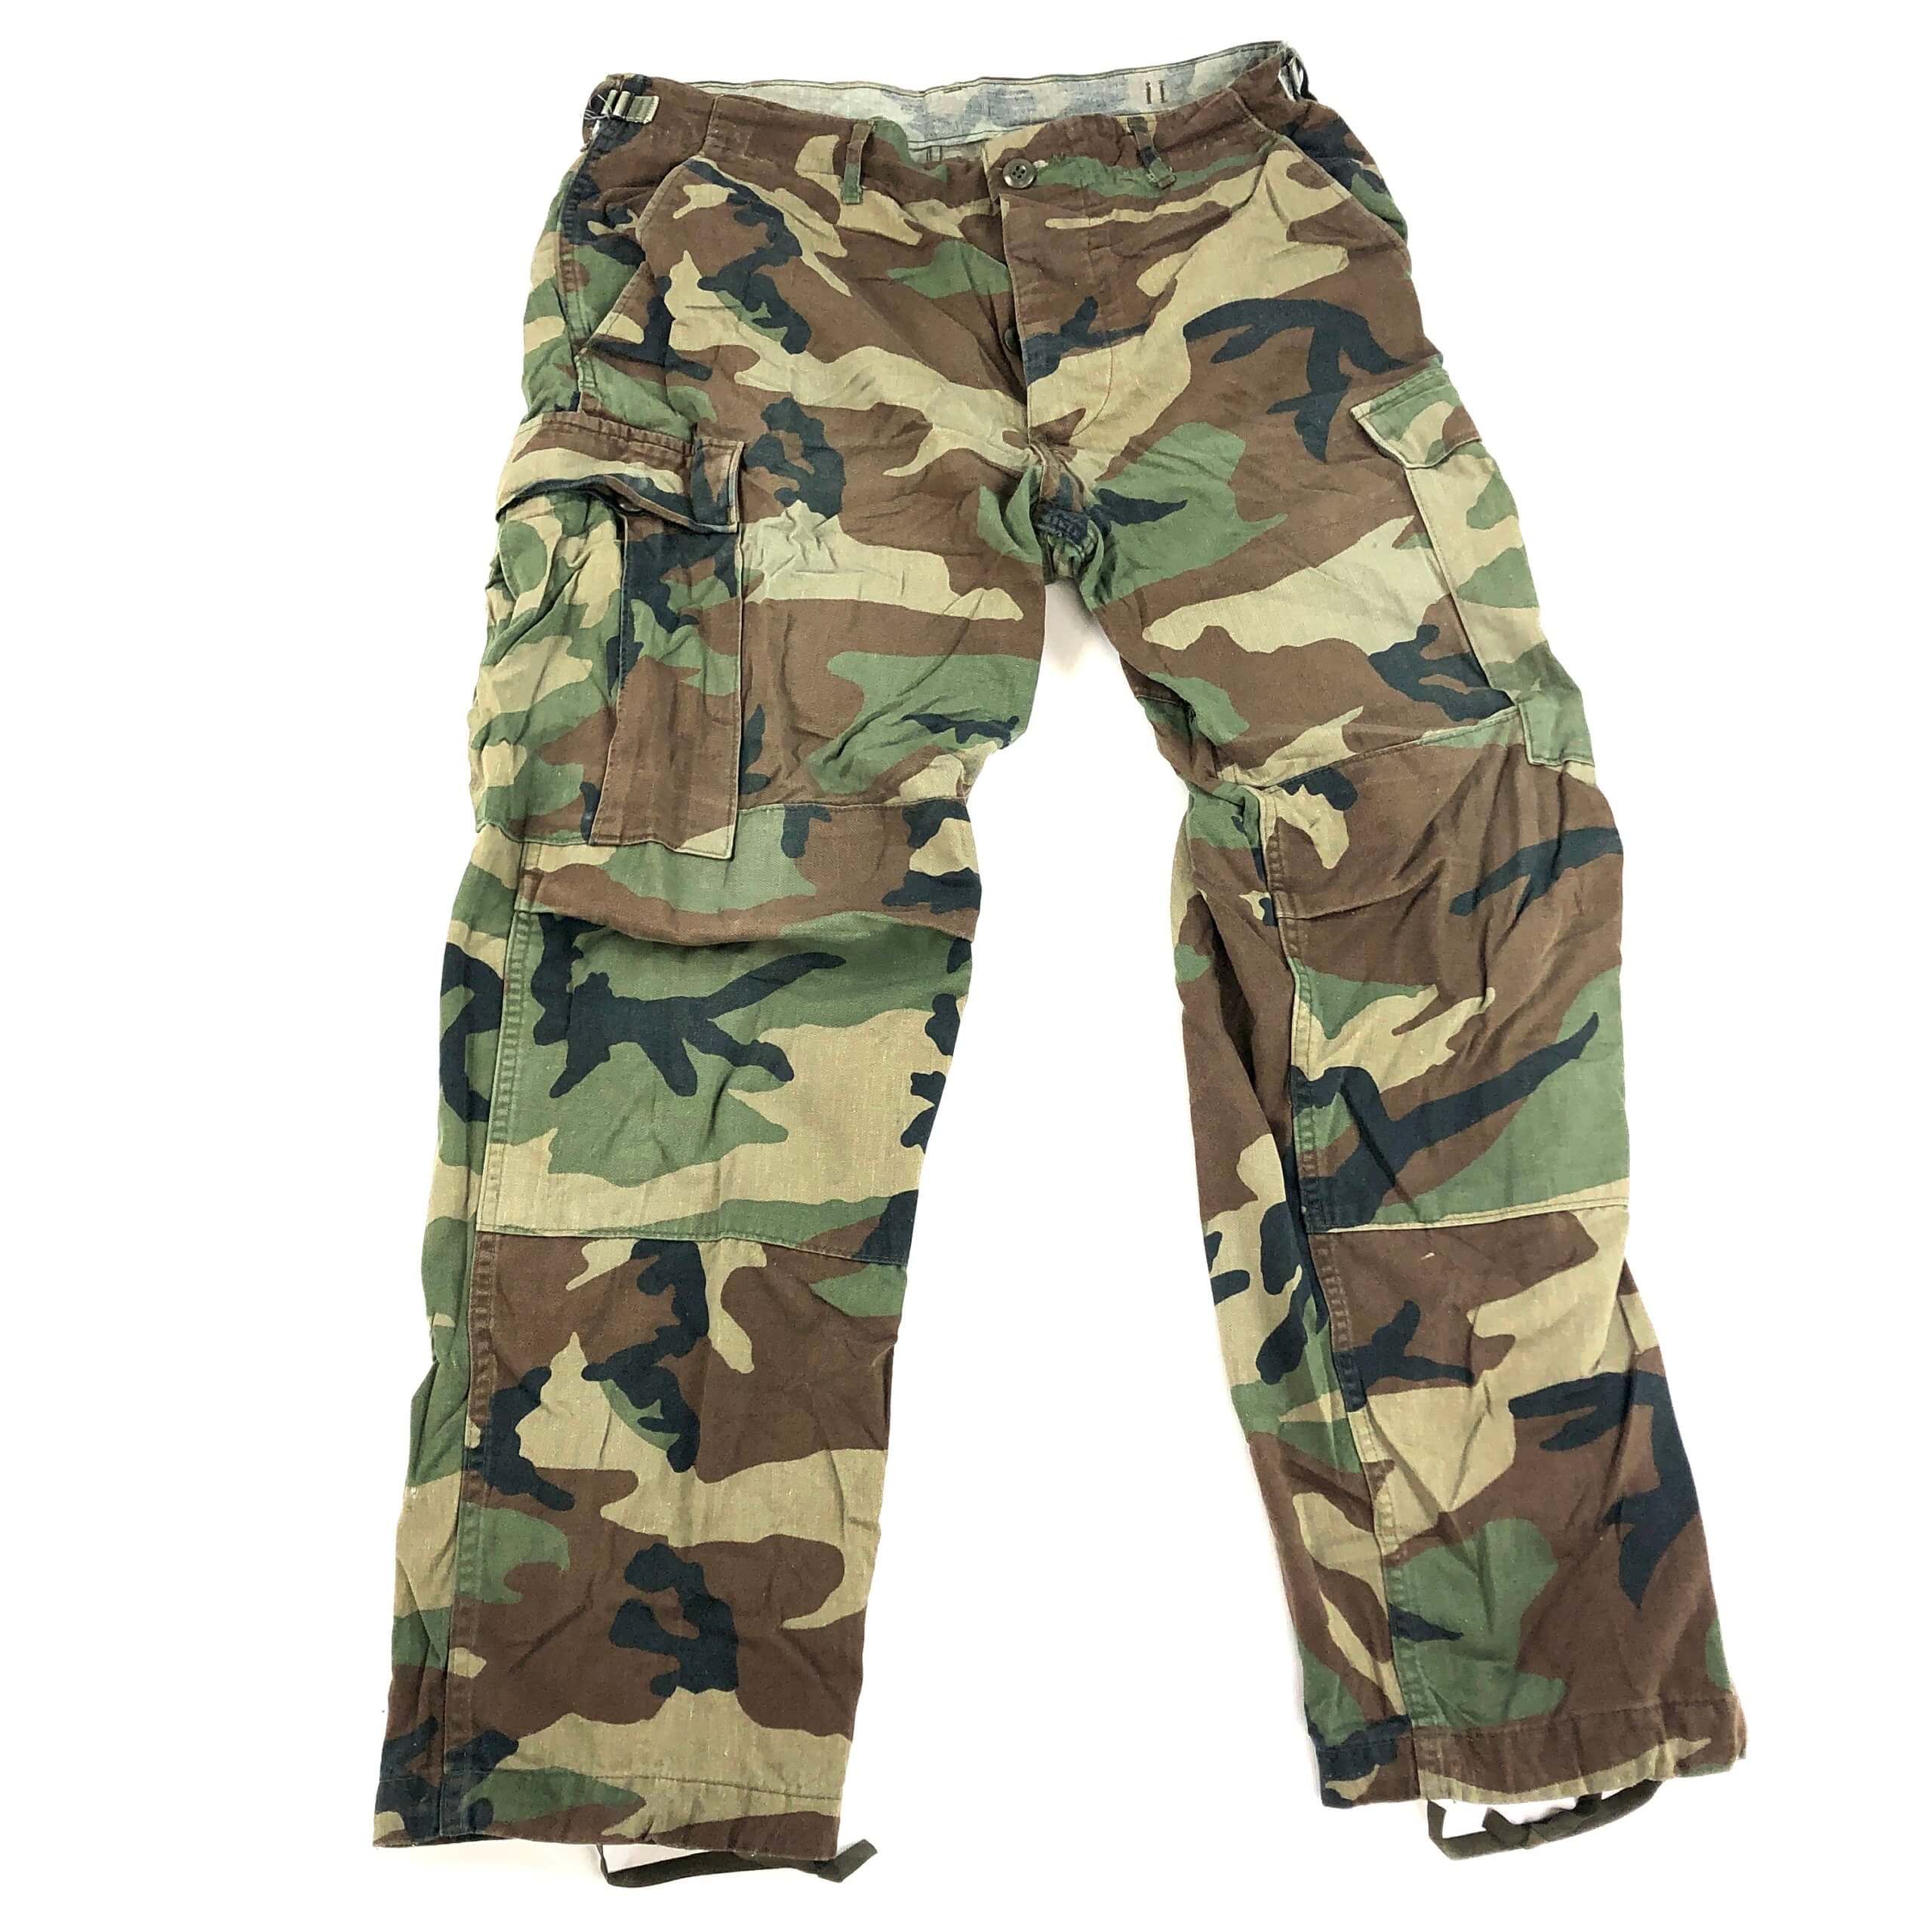 Made in USA ARMY Woodland Camo BDU Fatigues Military Uniform Pants Trousers USGI 